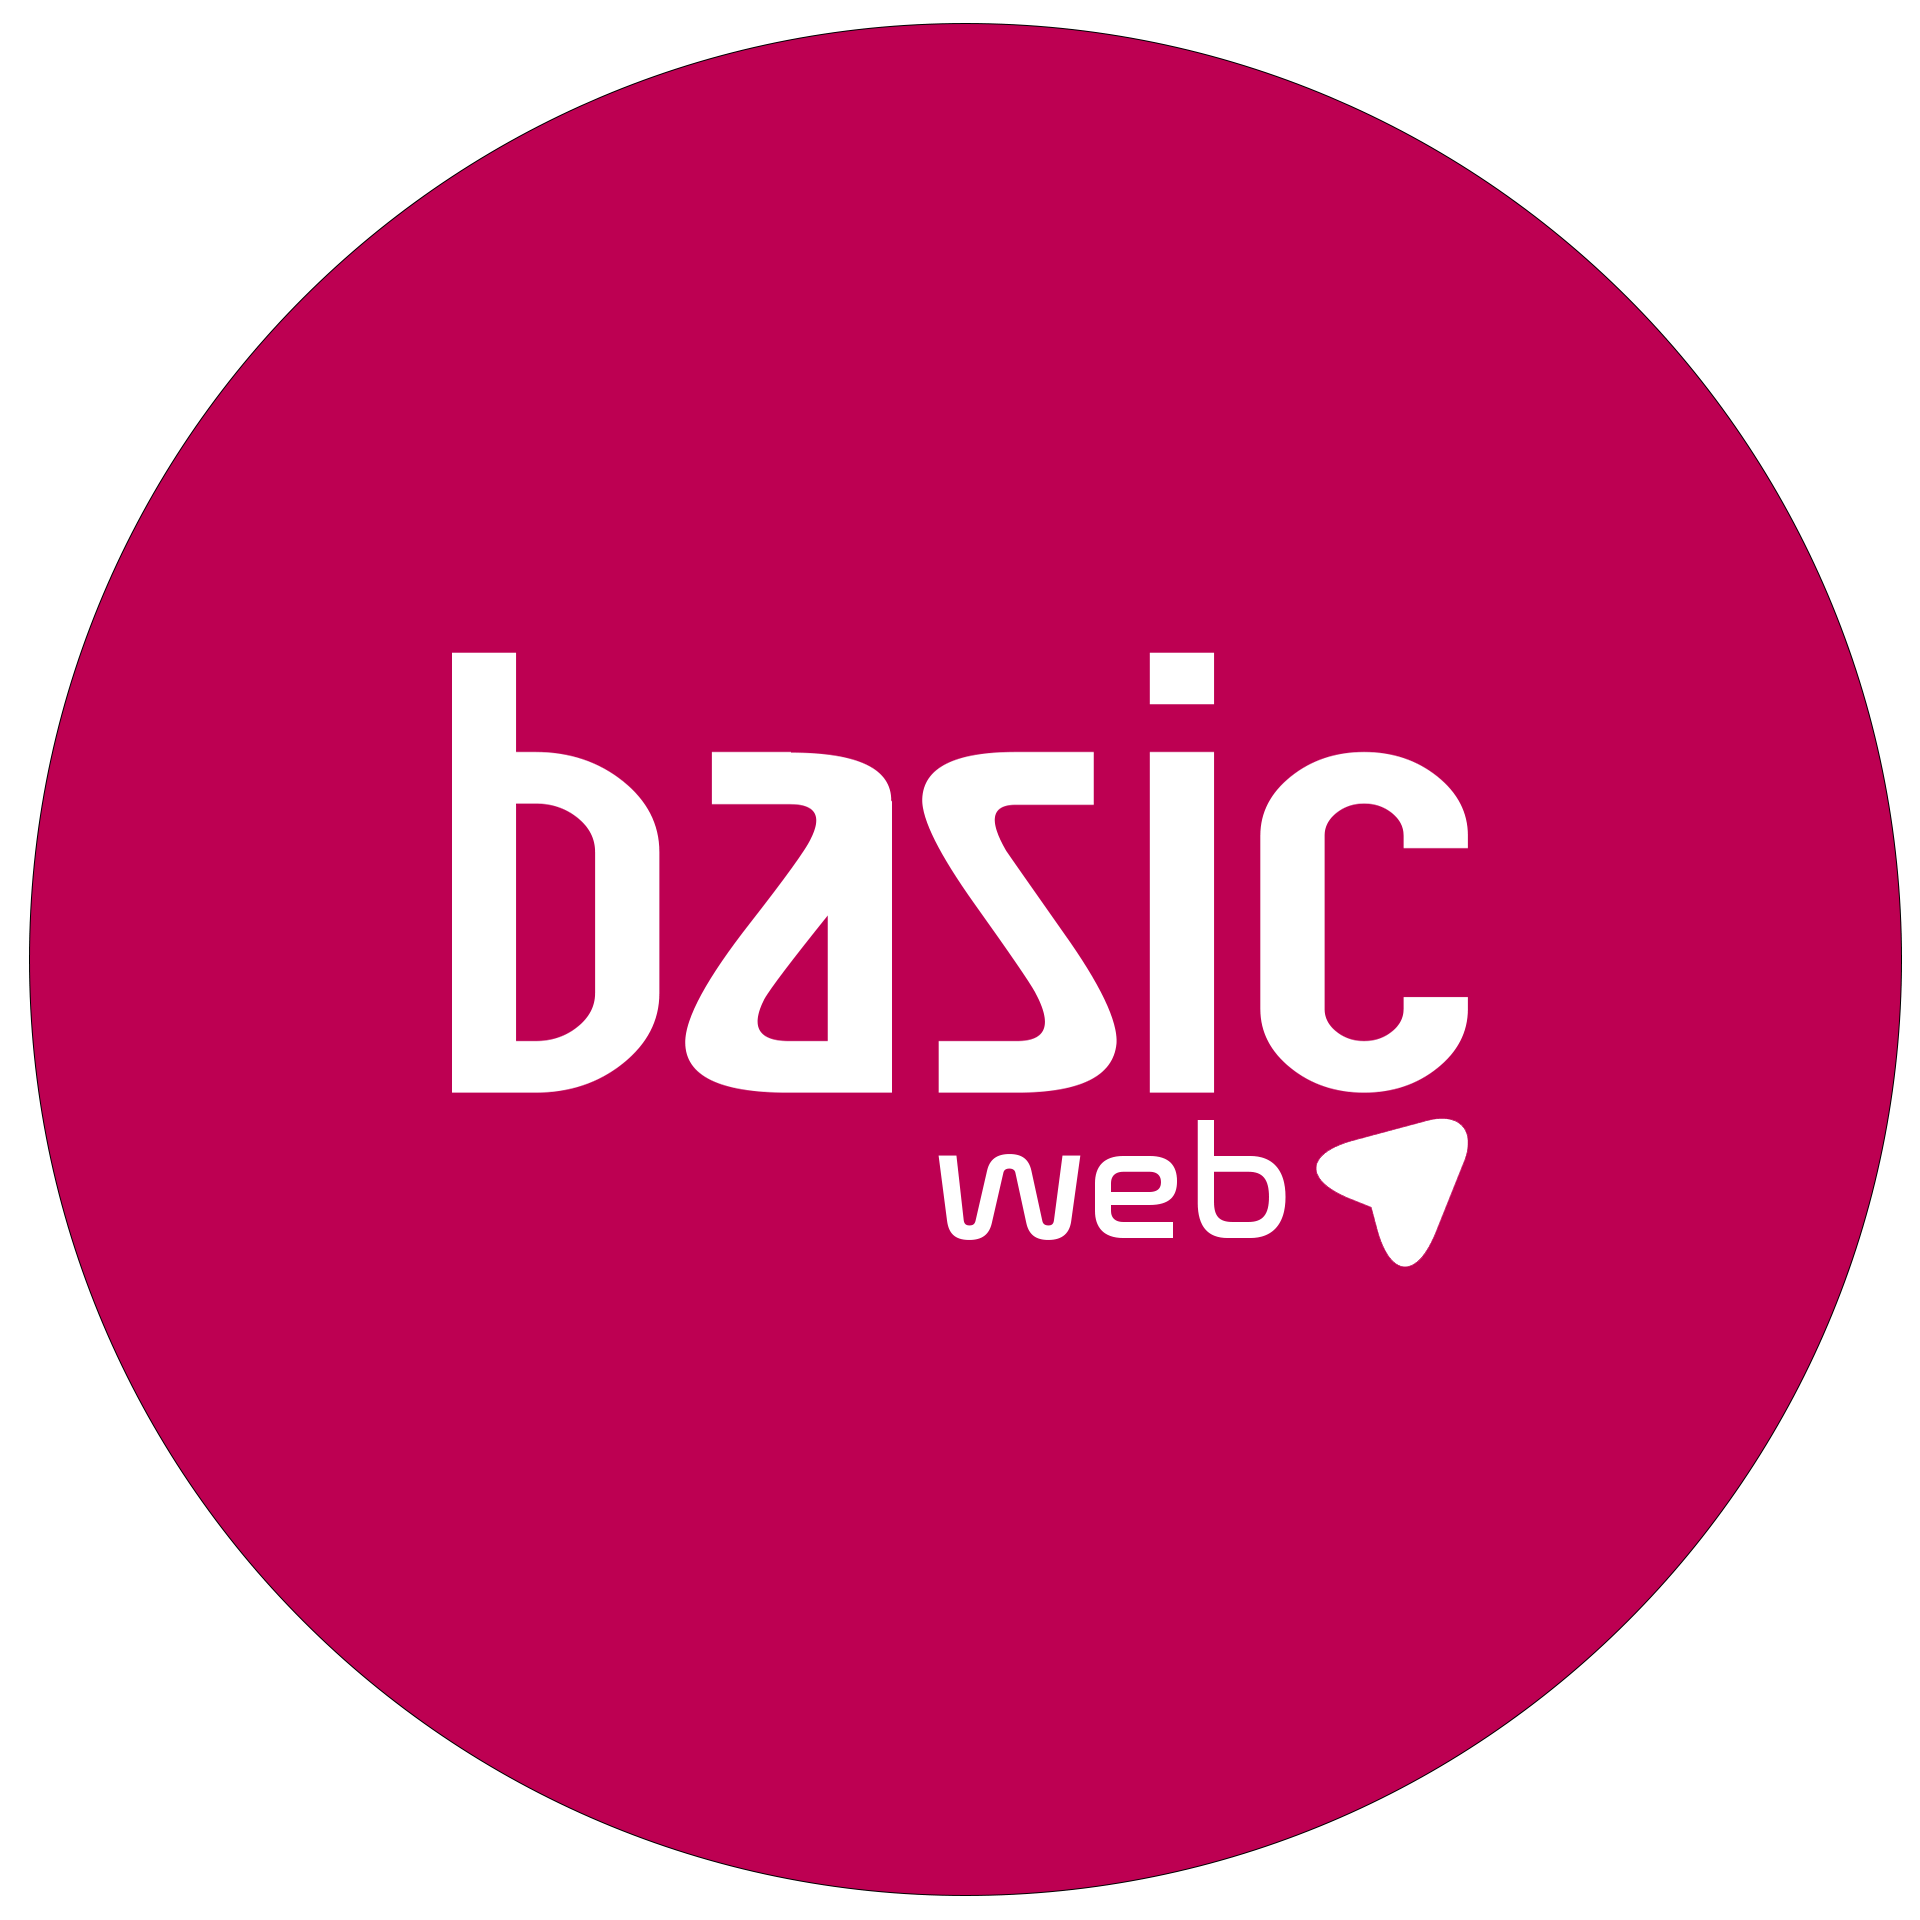 (c) Basicweb.com.br